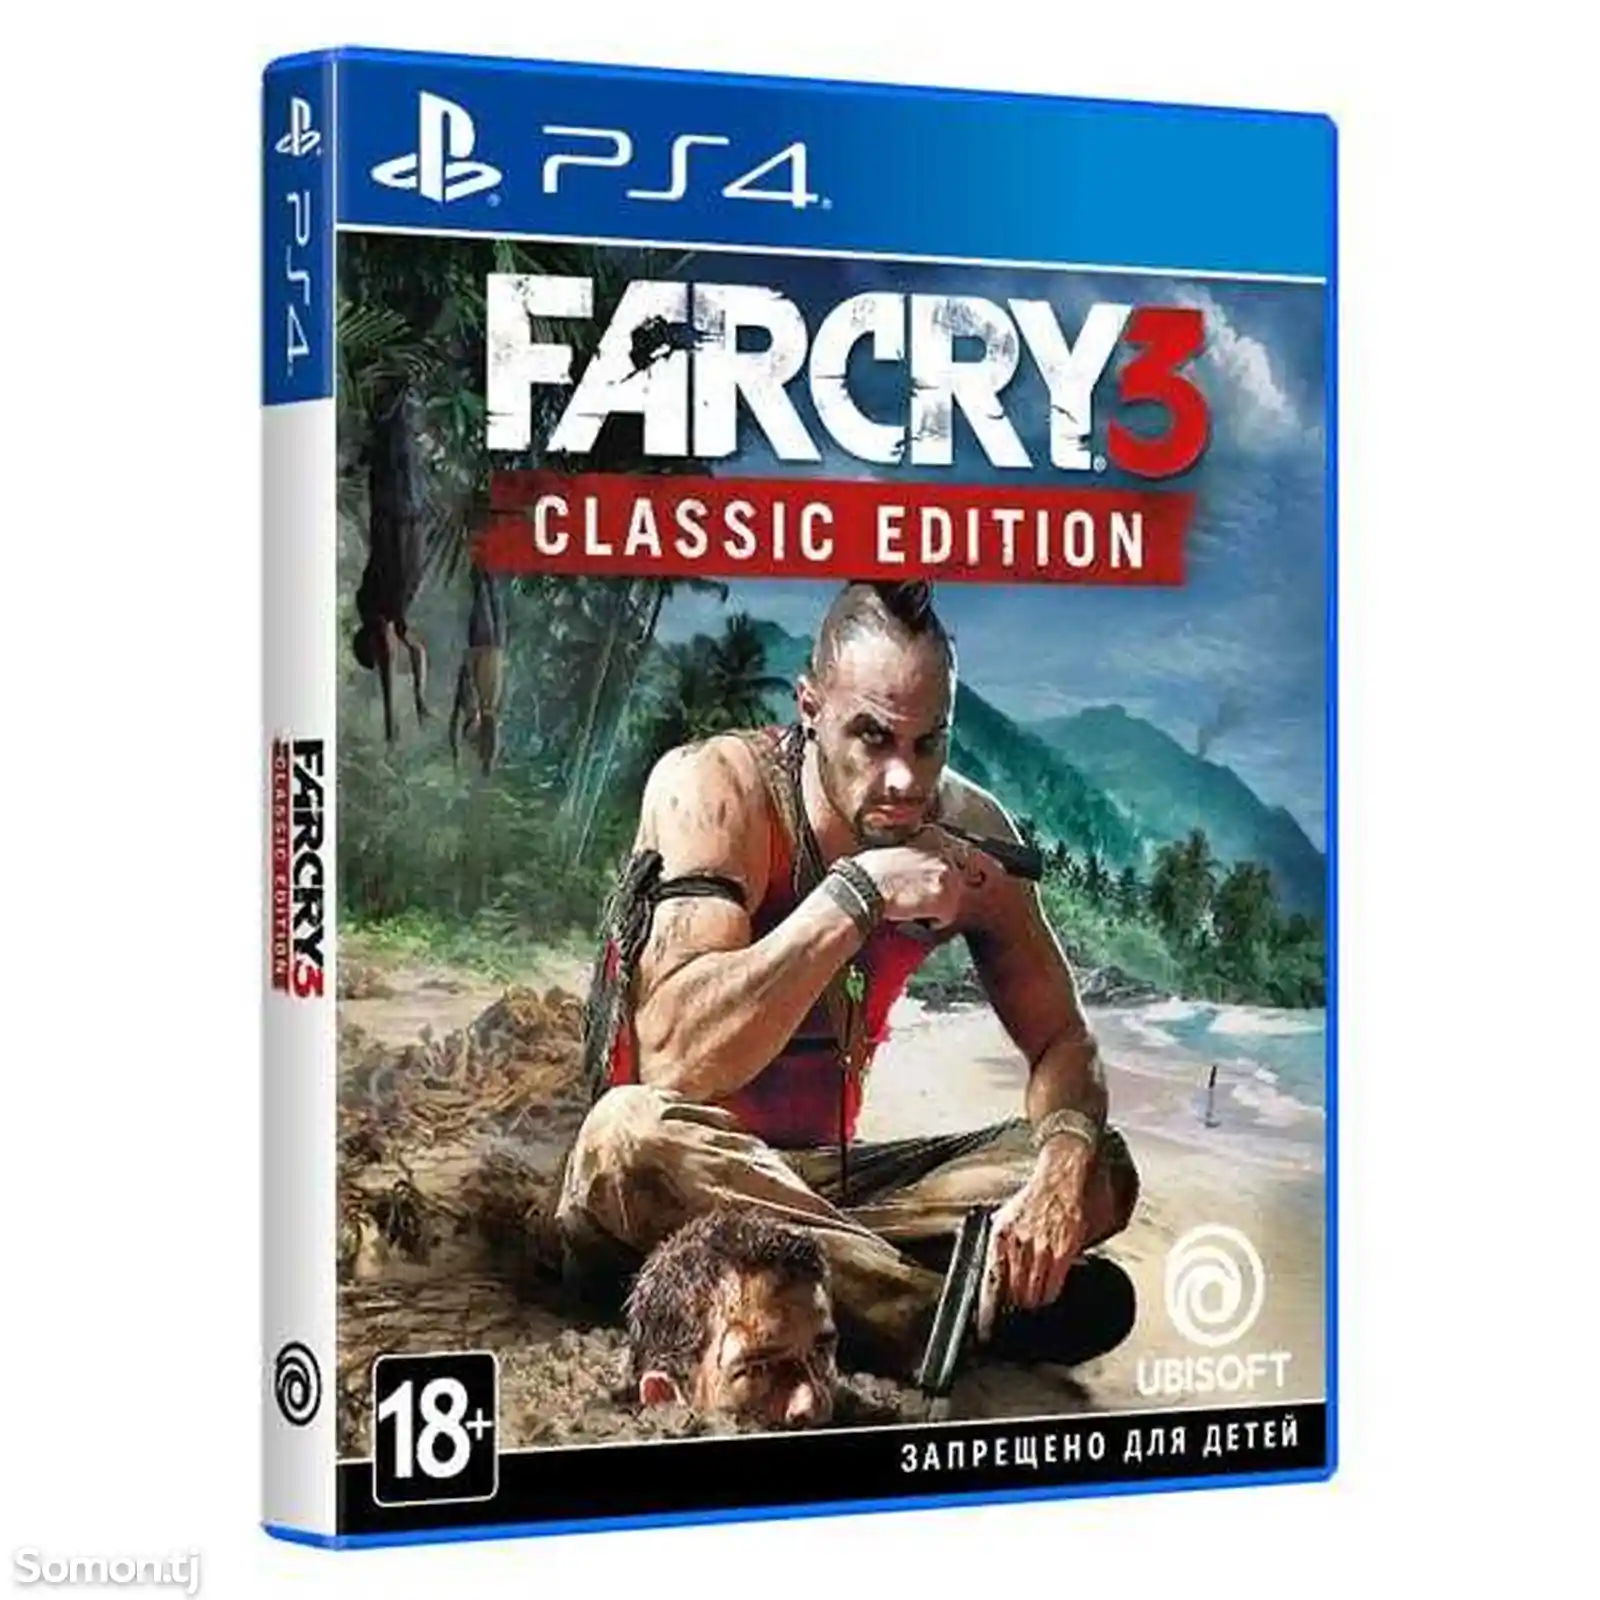 Игра Ubisoft Far Cry 3 Classic Edition для PS4-1